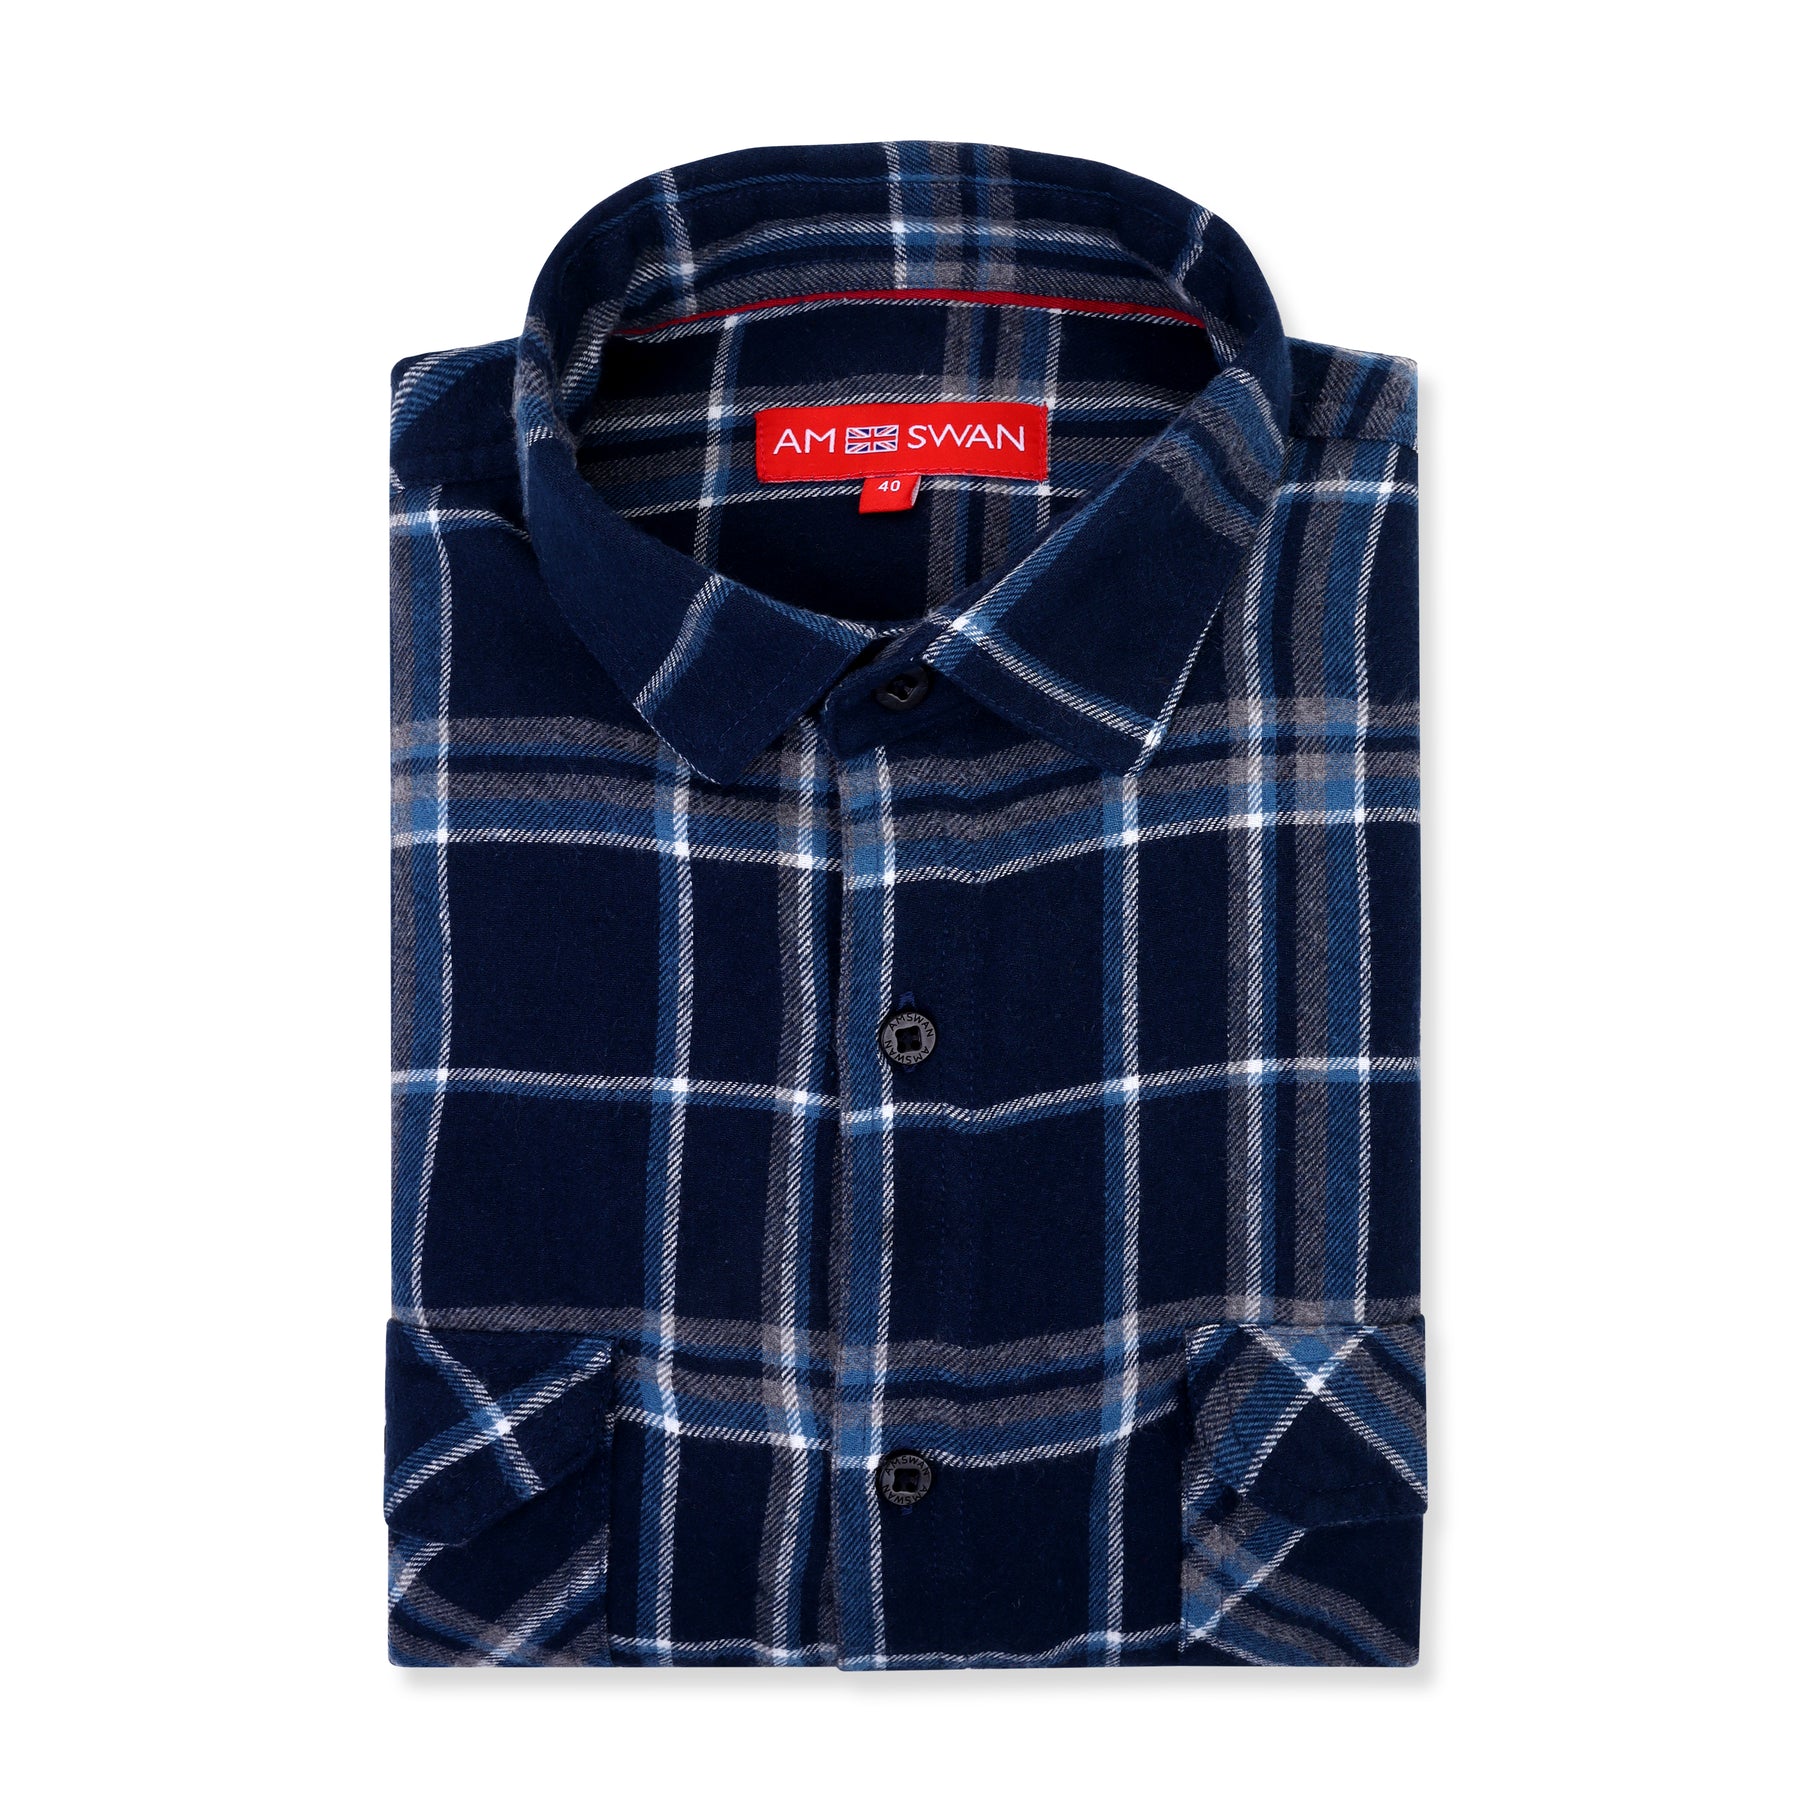 Premium Cotton flannel shirt